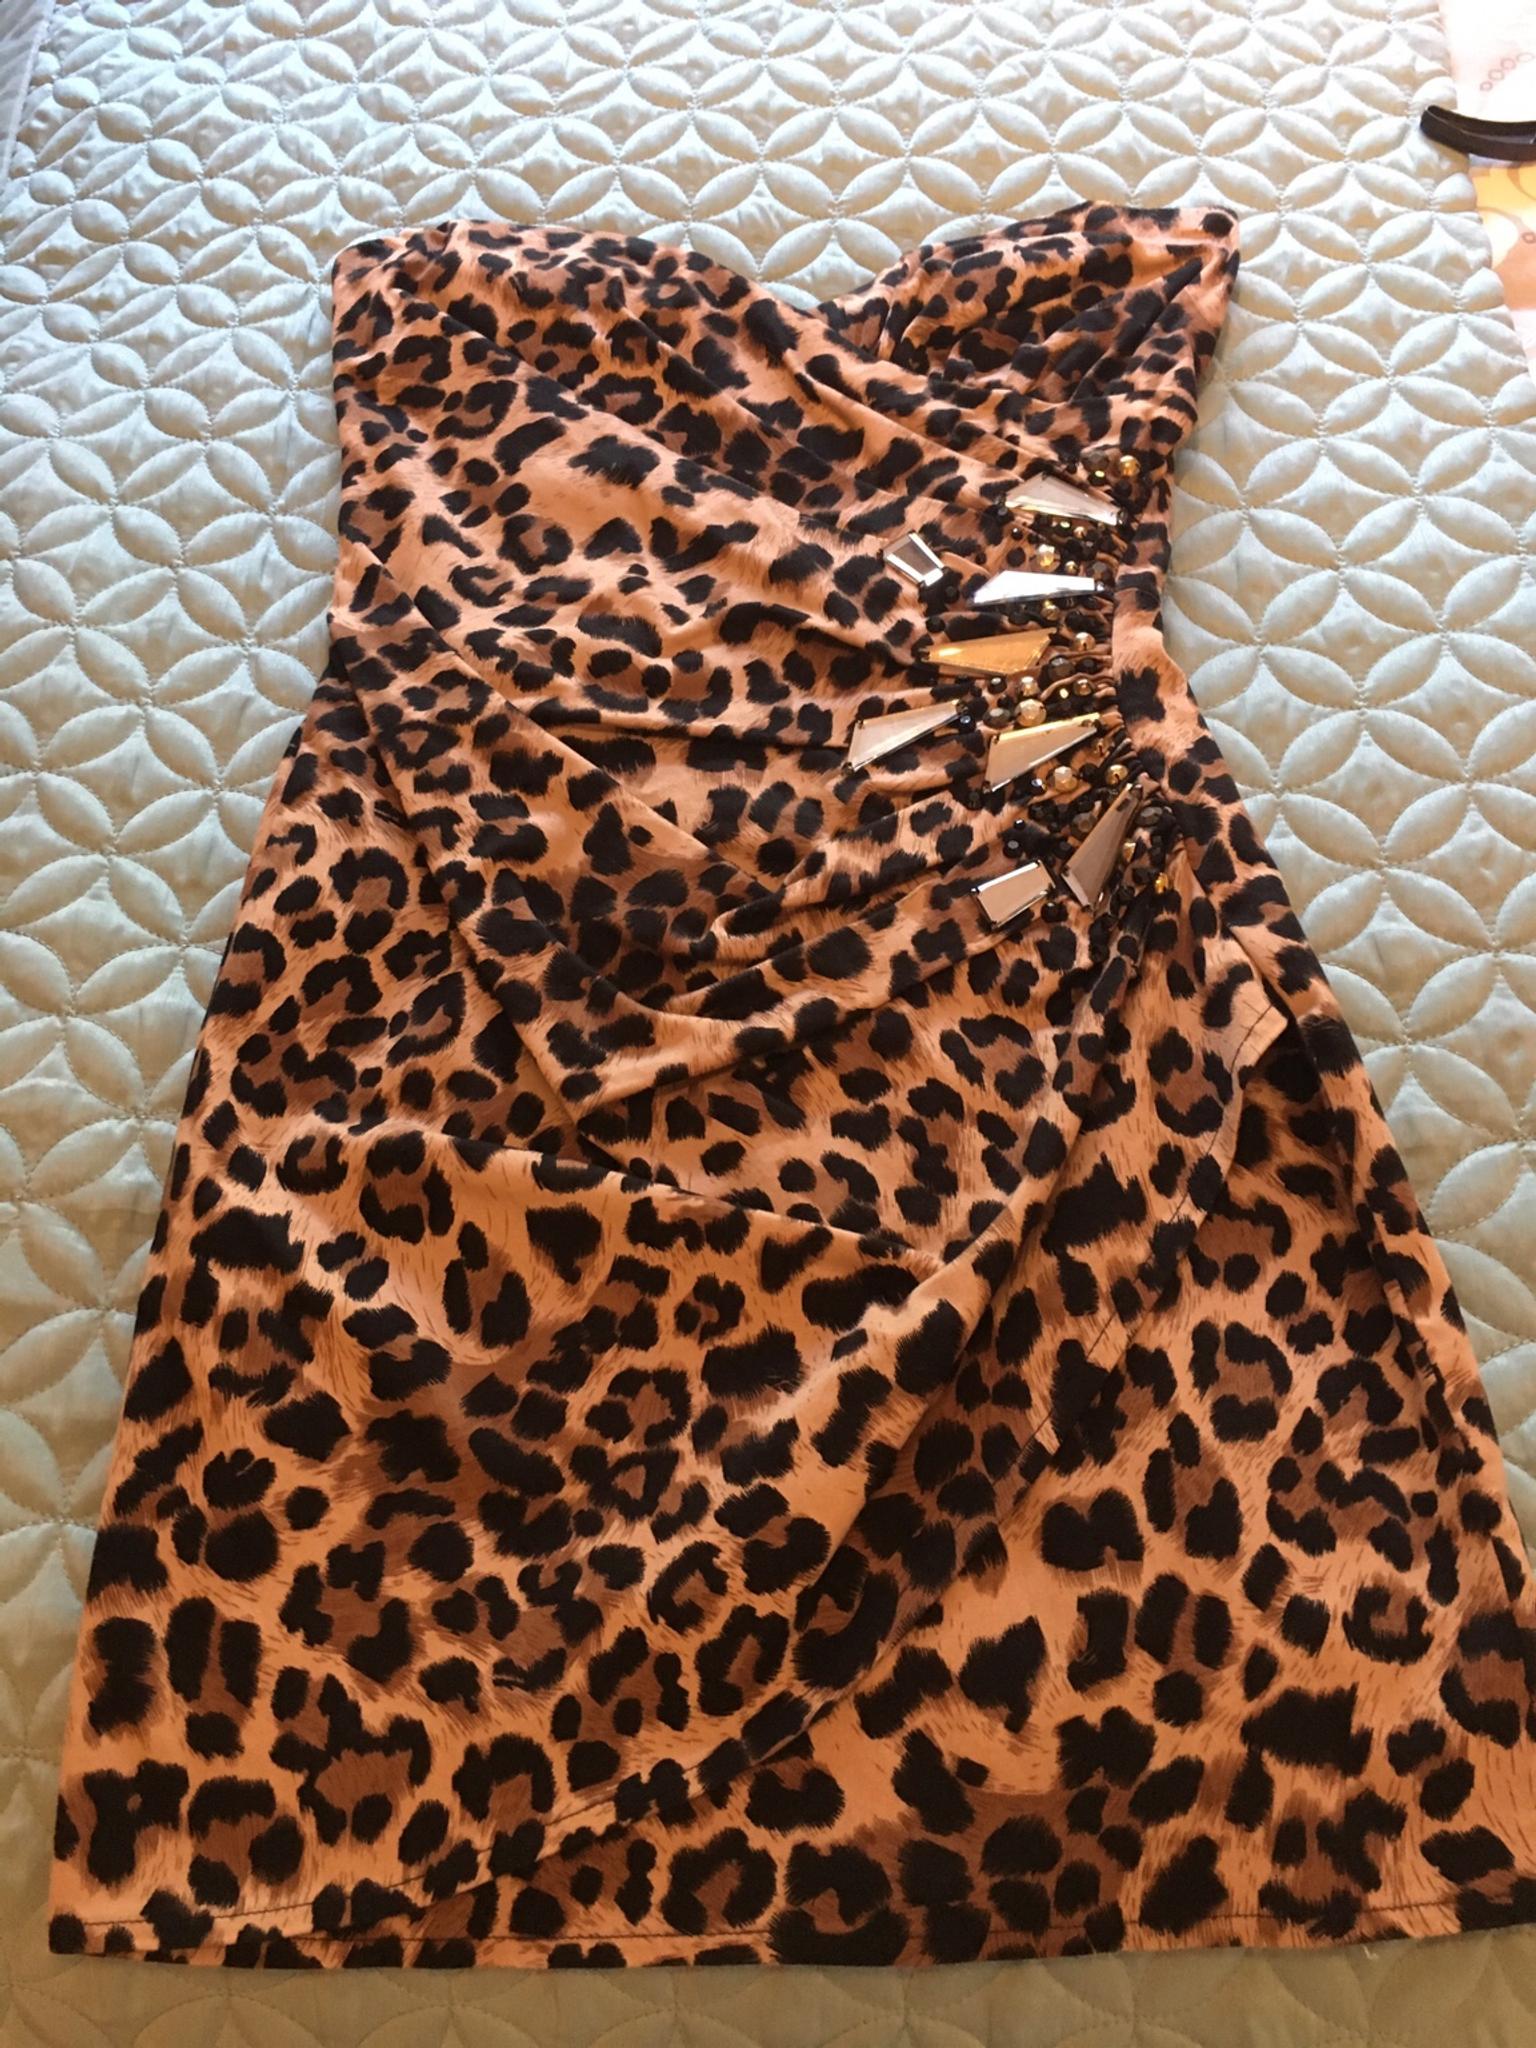 lipsy leopard dress